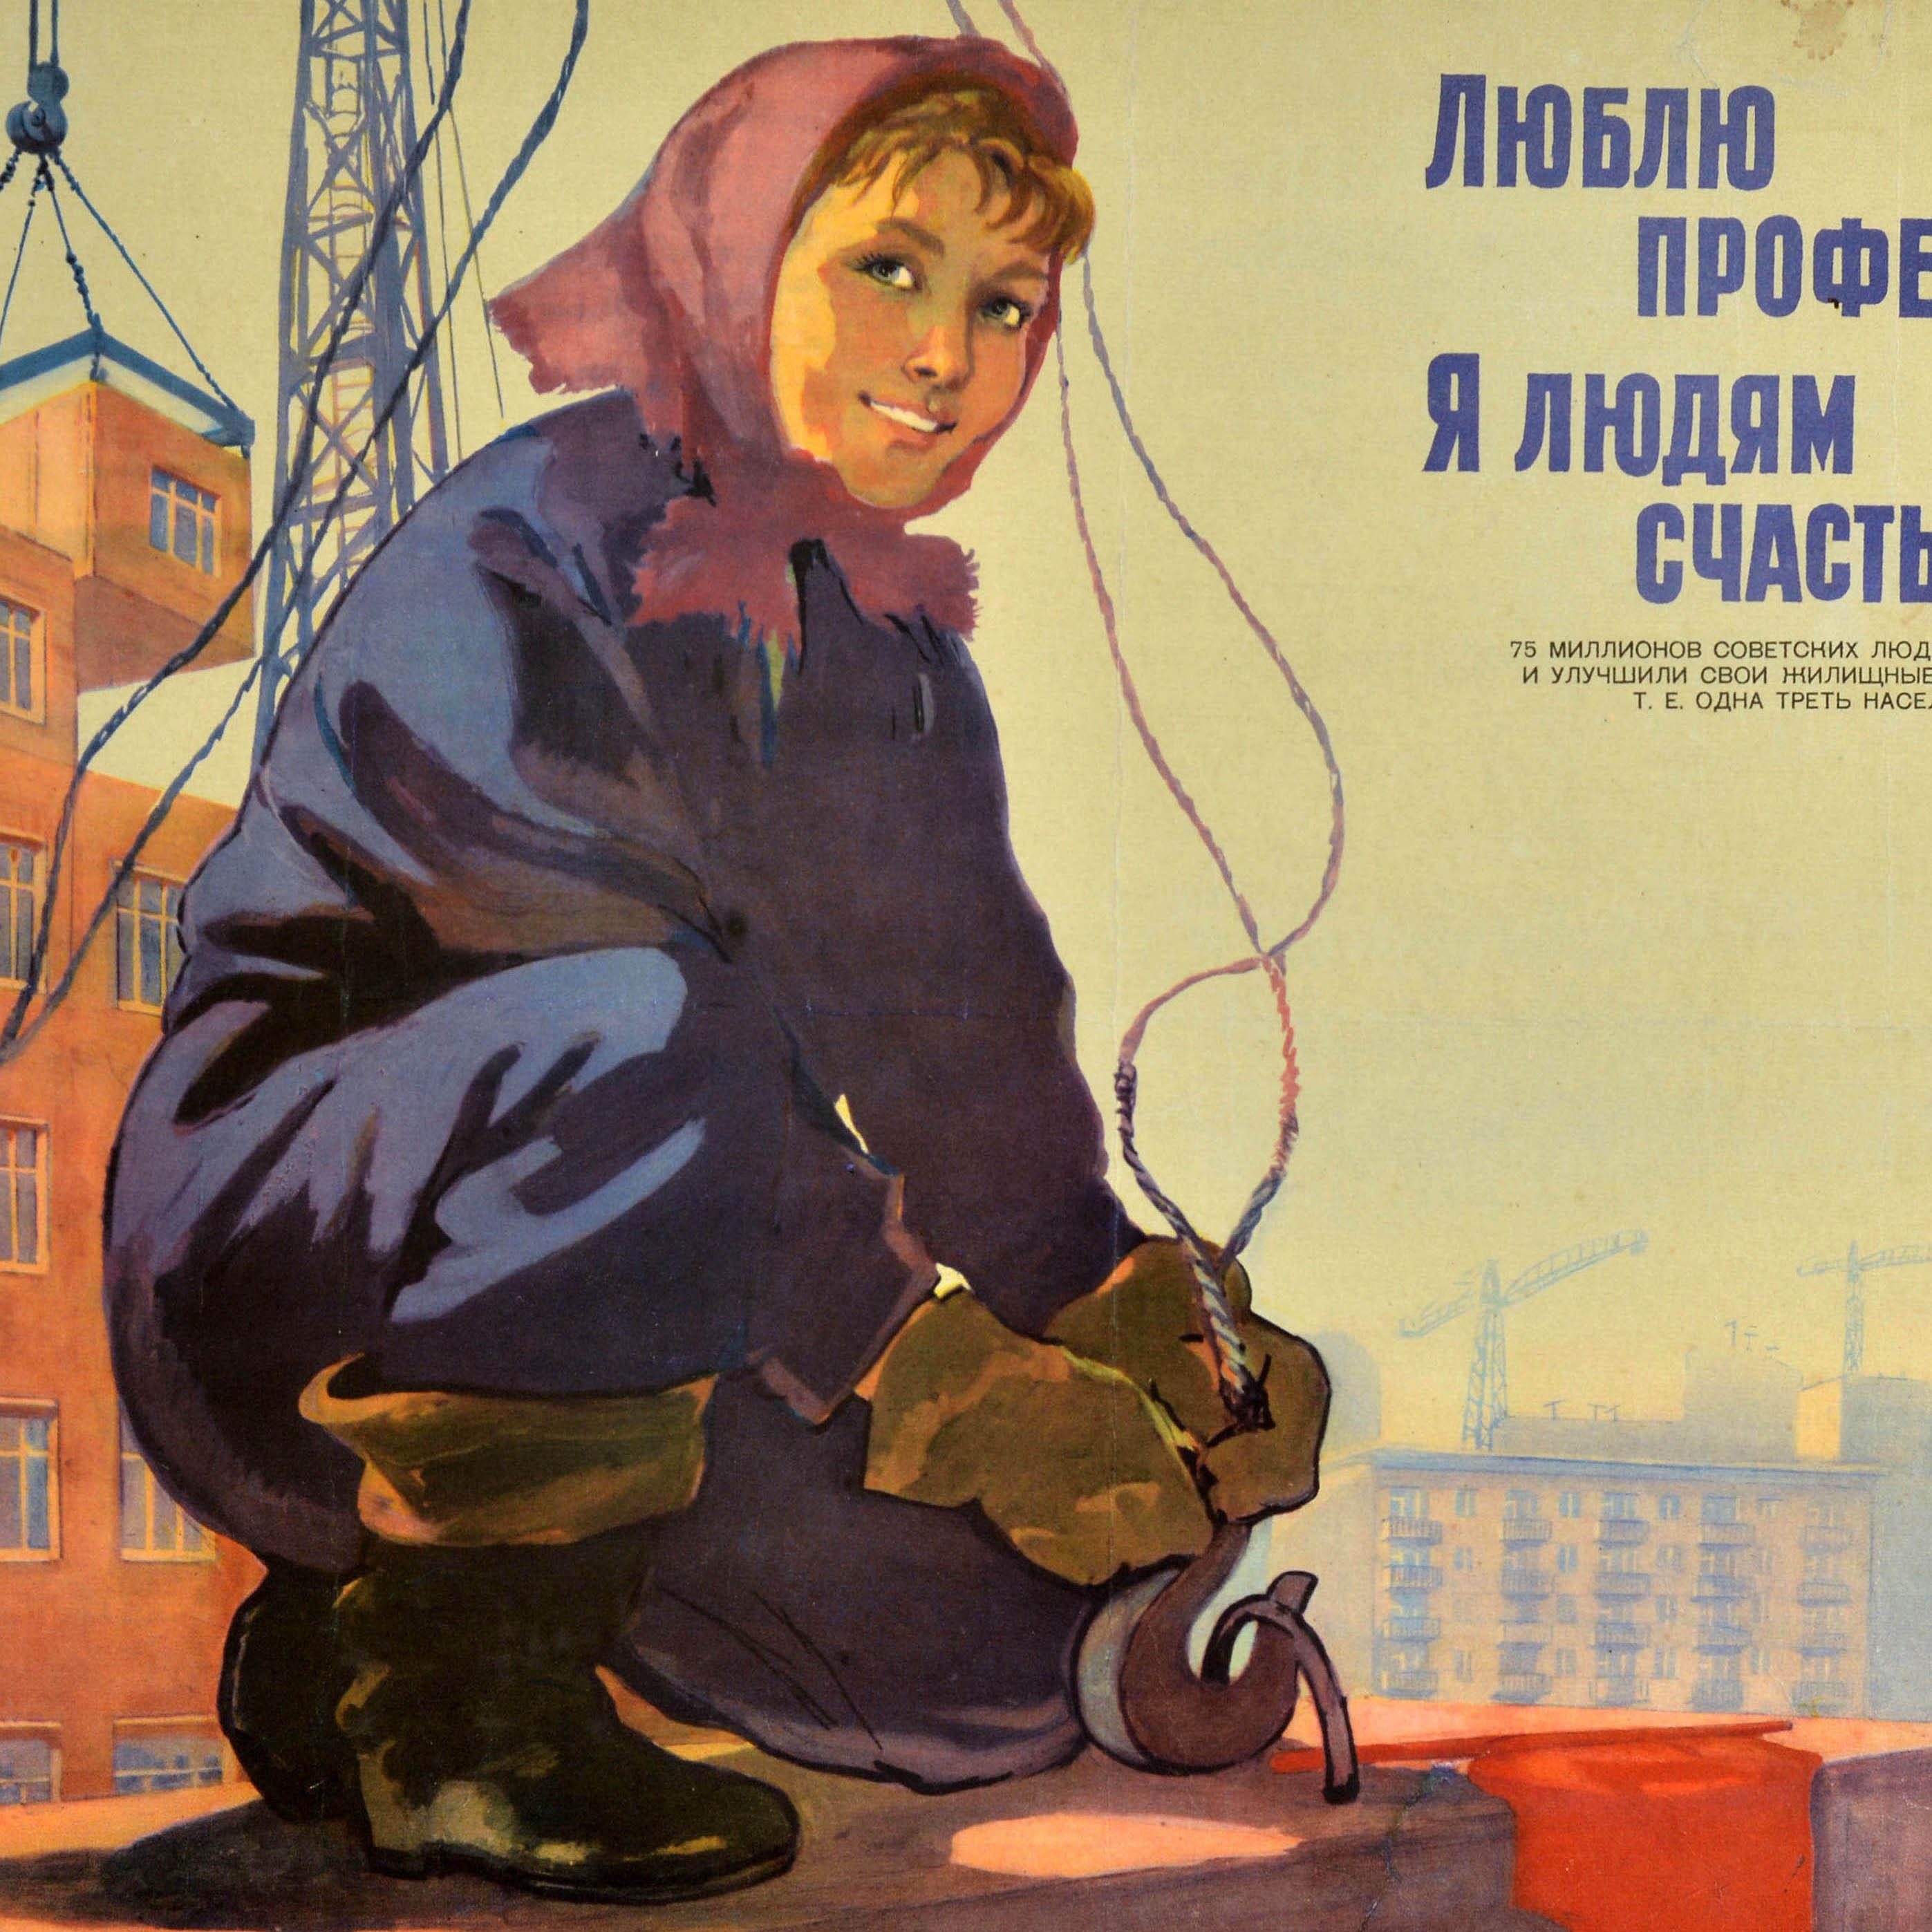 Original Vintage Soviet Propaganda Poster Housing Construction Builder USSR - Print by Unknown